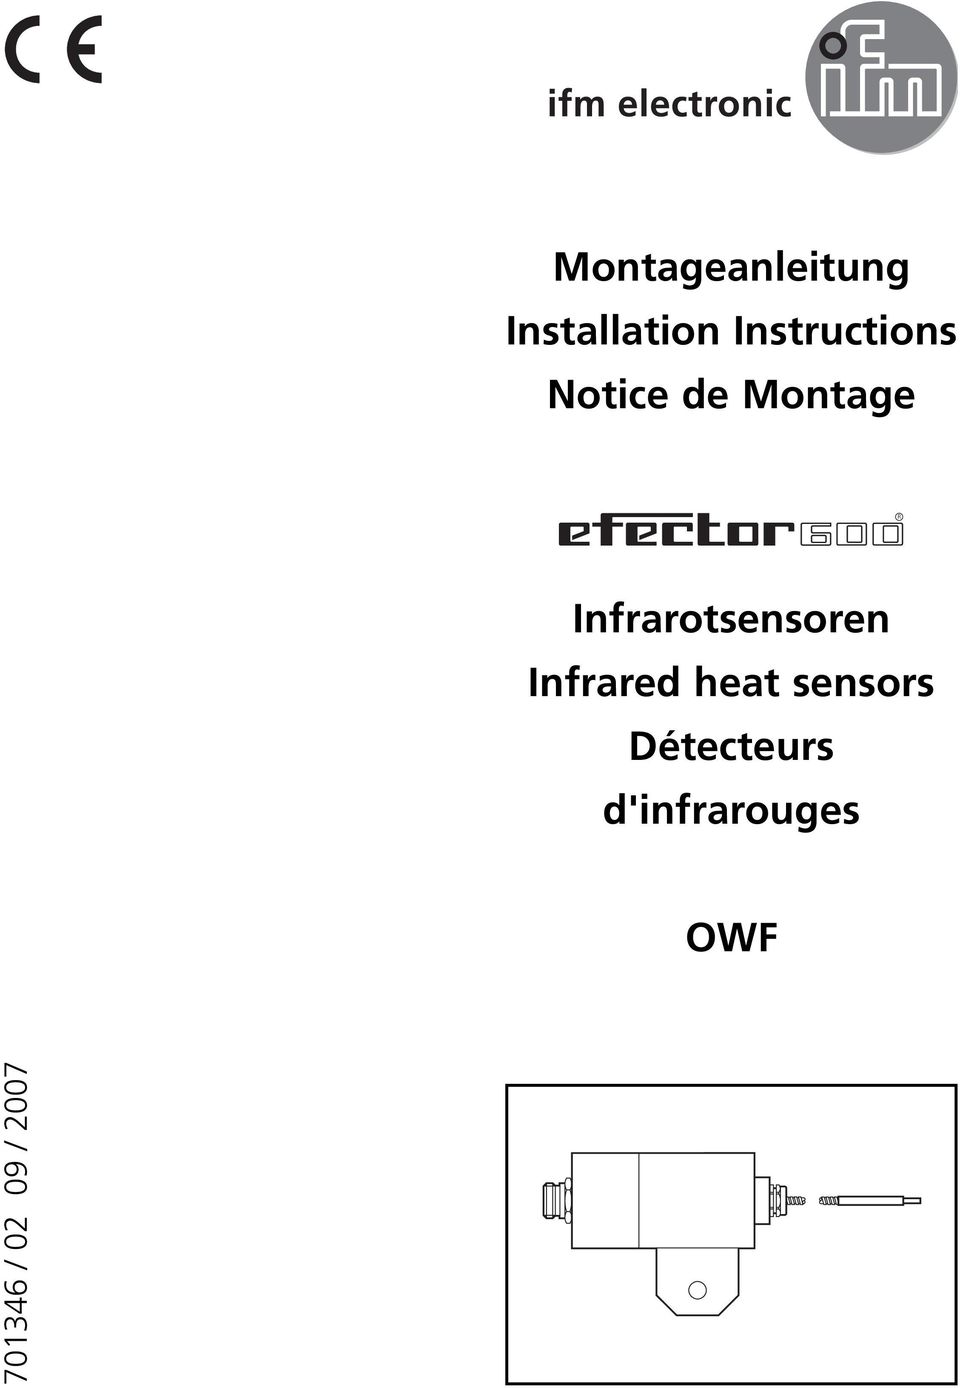 Infrarotsensoren Infrared heat